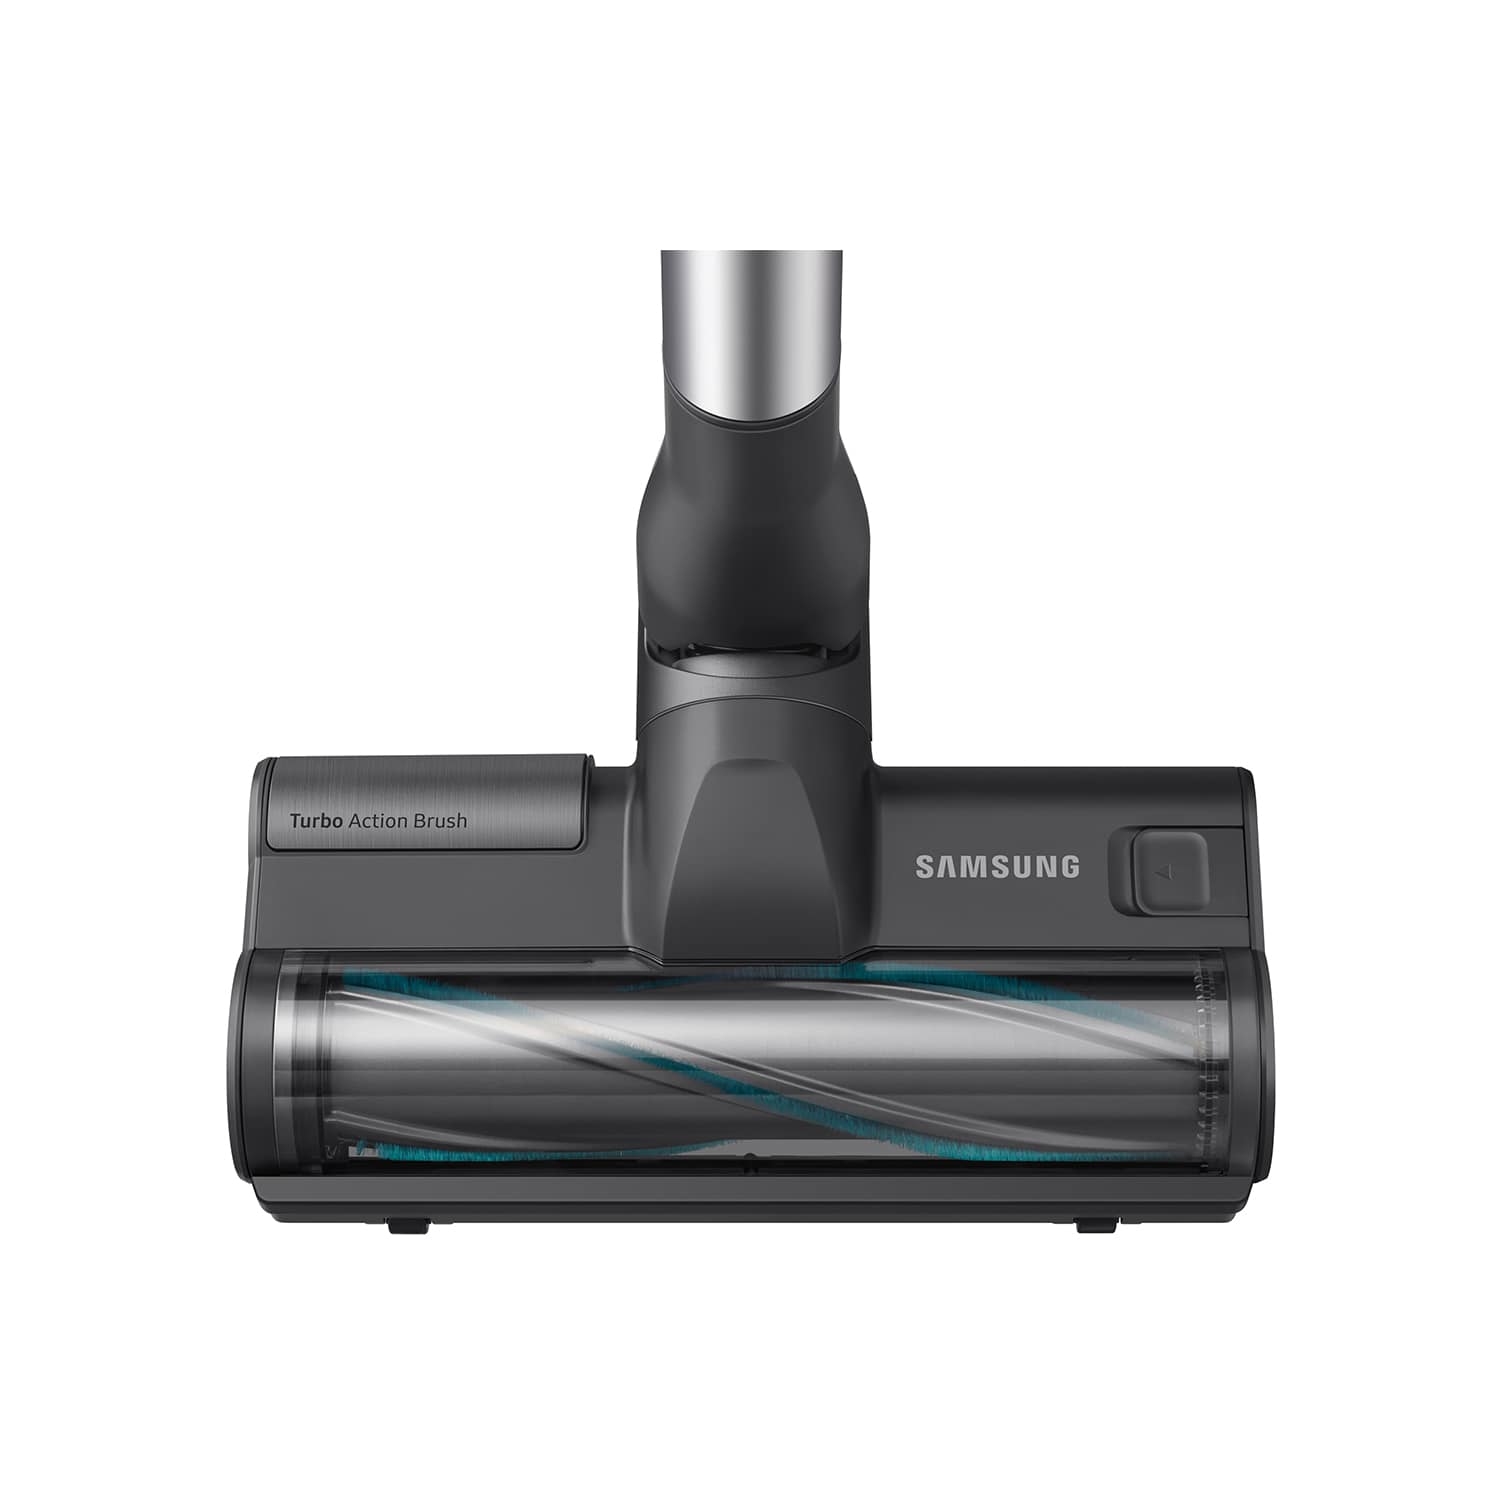 Samsung VS20R9042S2 Jet 90 Pet Cordless Vacuum Cleaner - 60 Minute Run Time - 8